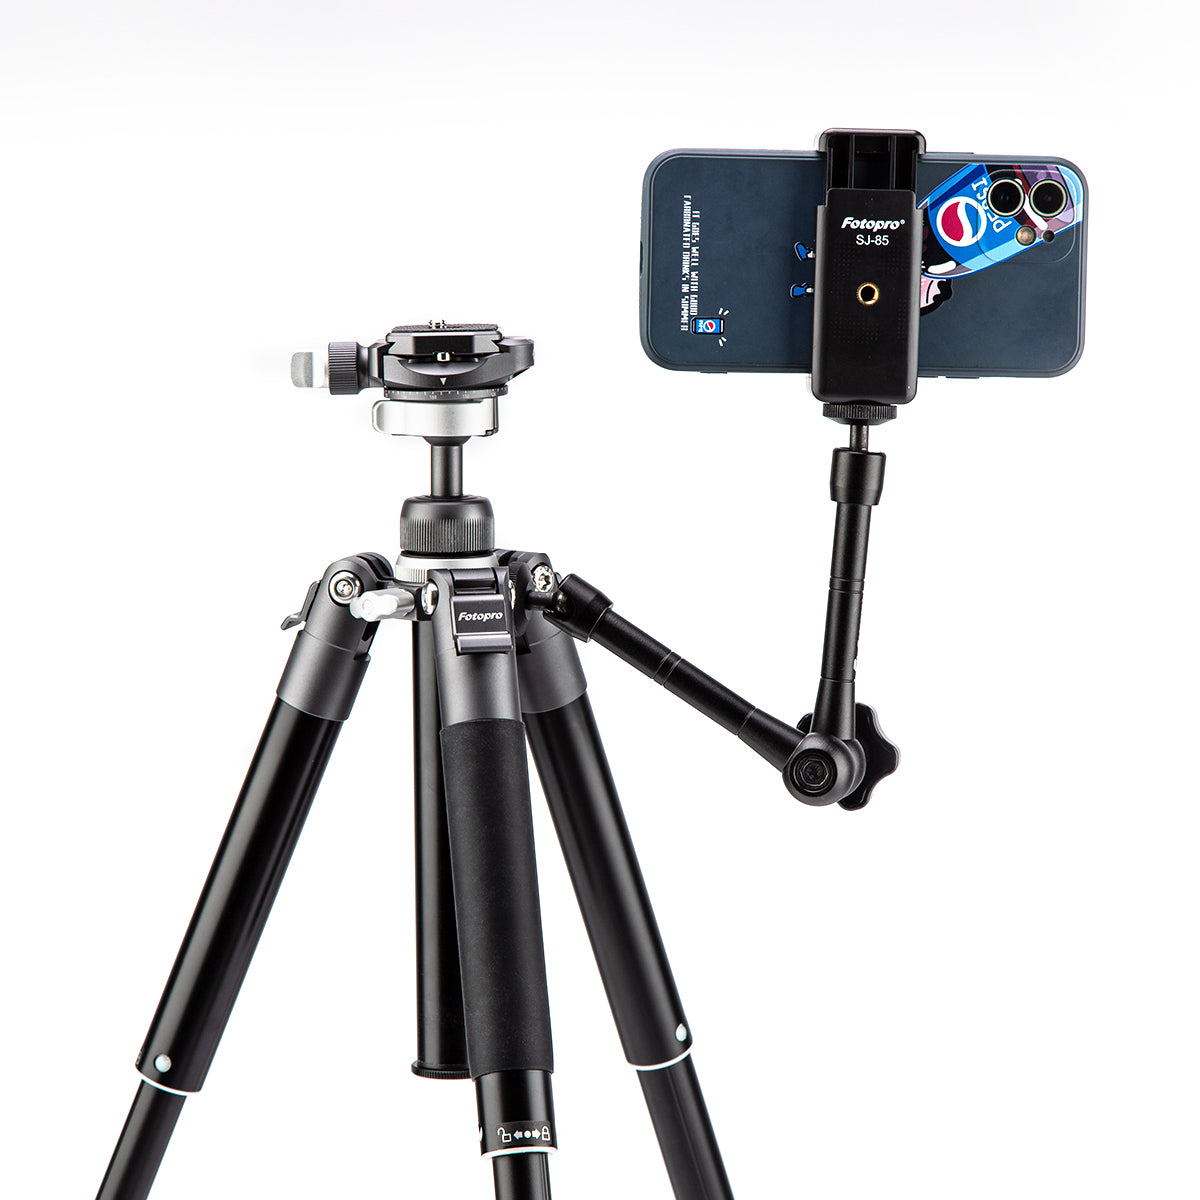 Fotopro Free-1 Compact Monopod Travel Portable Tripod for Camera Smartphone